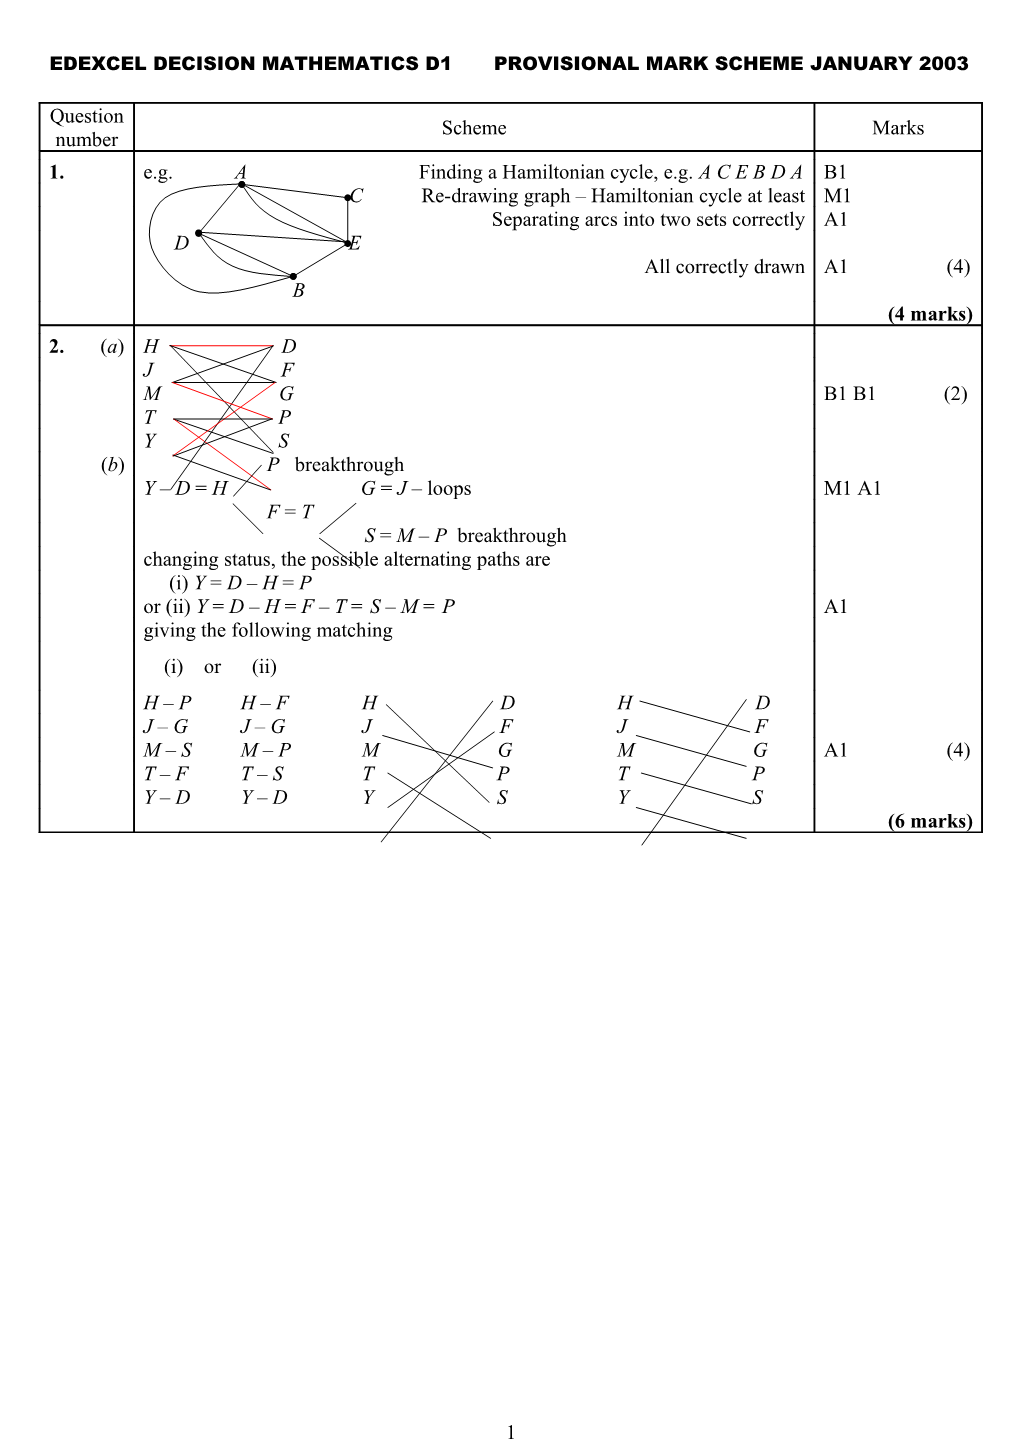 Edexcel Decision Mathematics D1 Provisional Mark Scheme January 2003